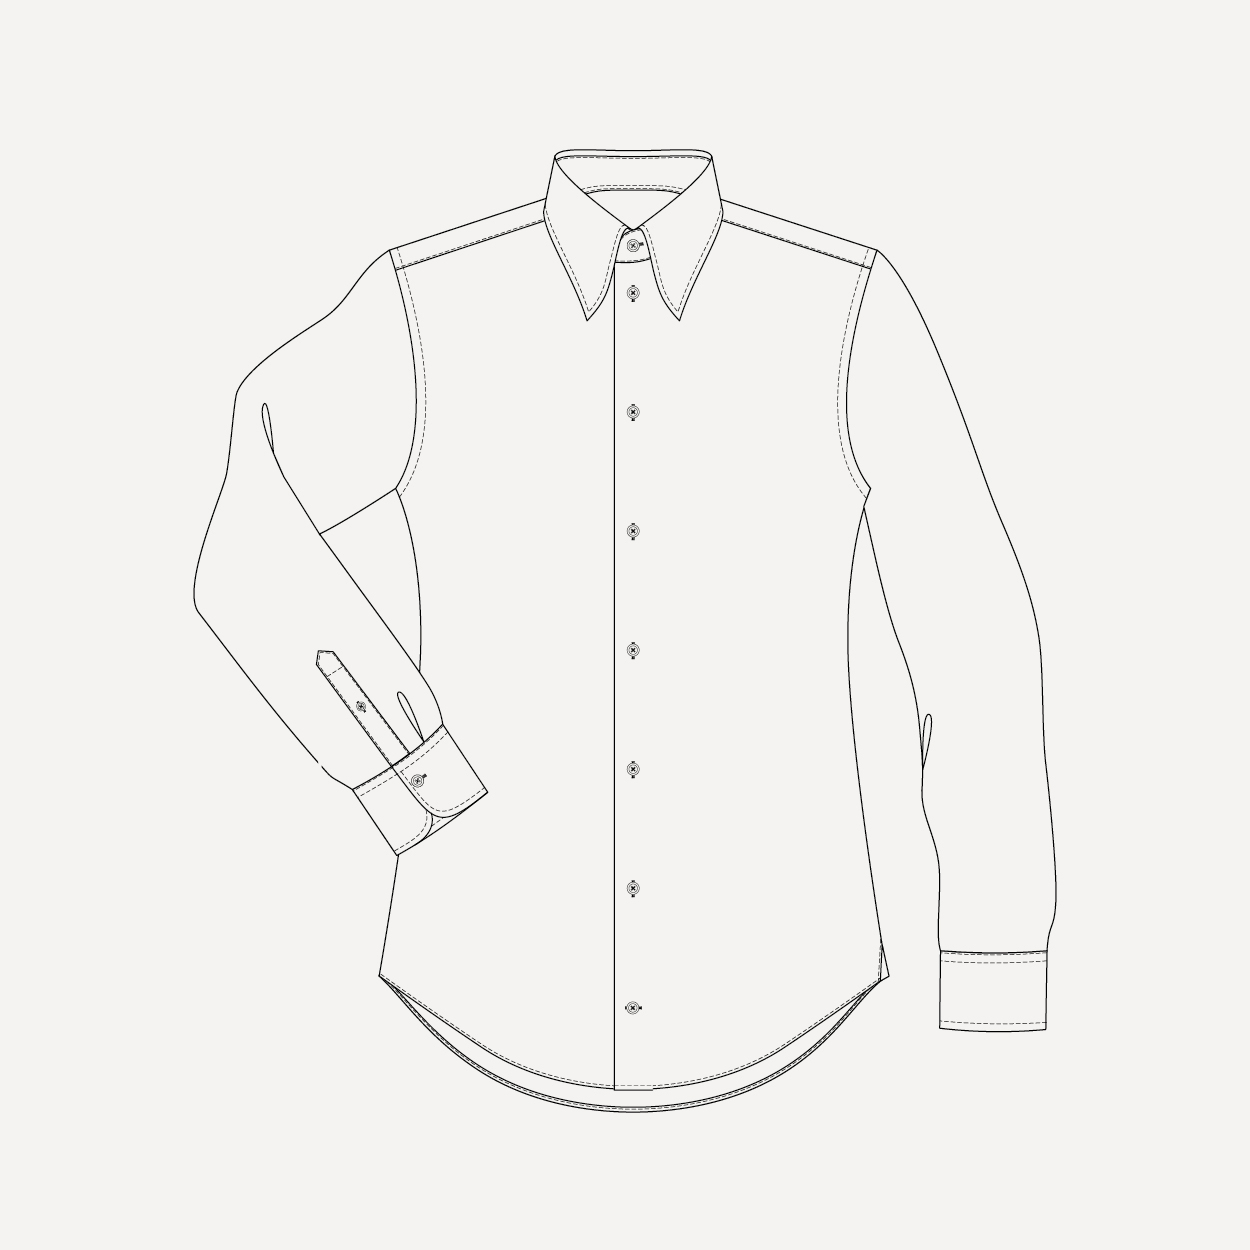 Collar Shirt Drawing at GetDrawings | Free download